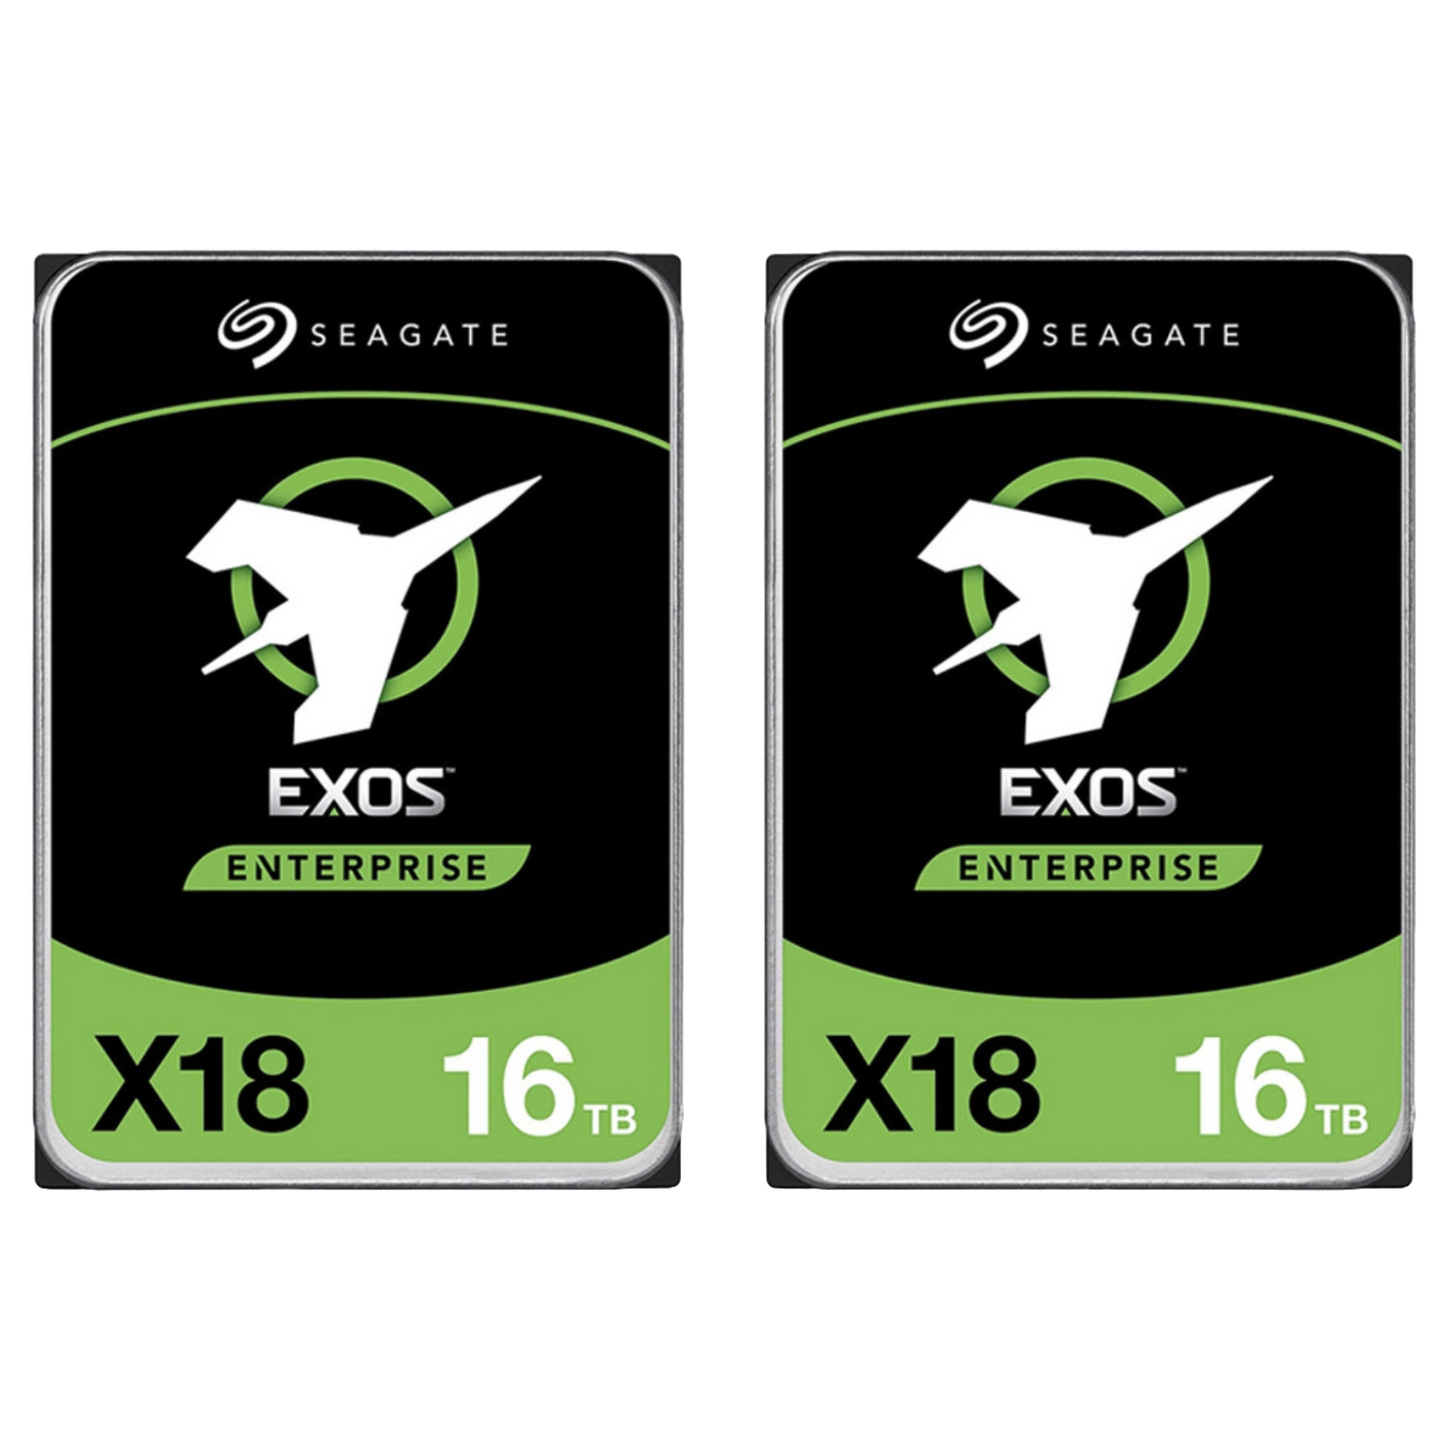 Seagate EXOS X18 16TB ST16000NM000J SATA CMR 3.5" Enterprise HDD OEM